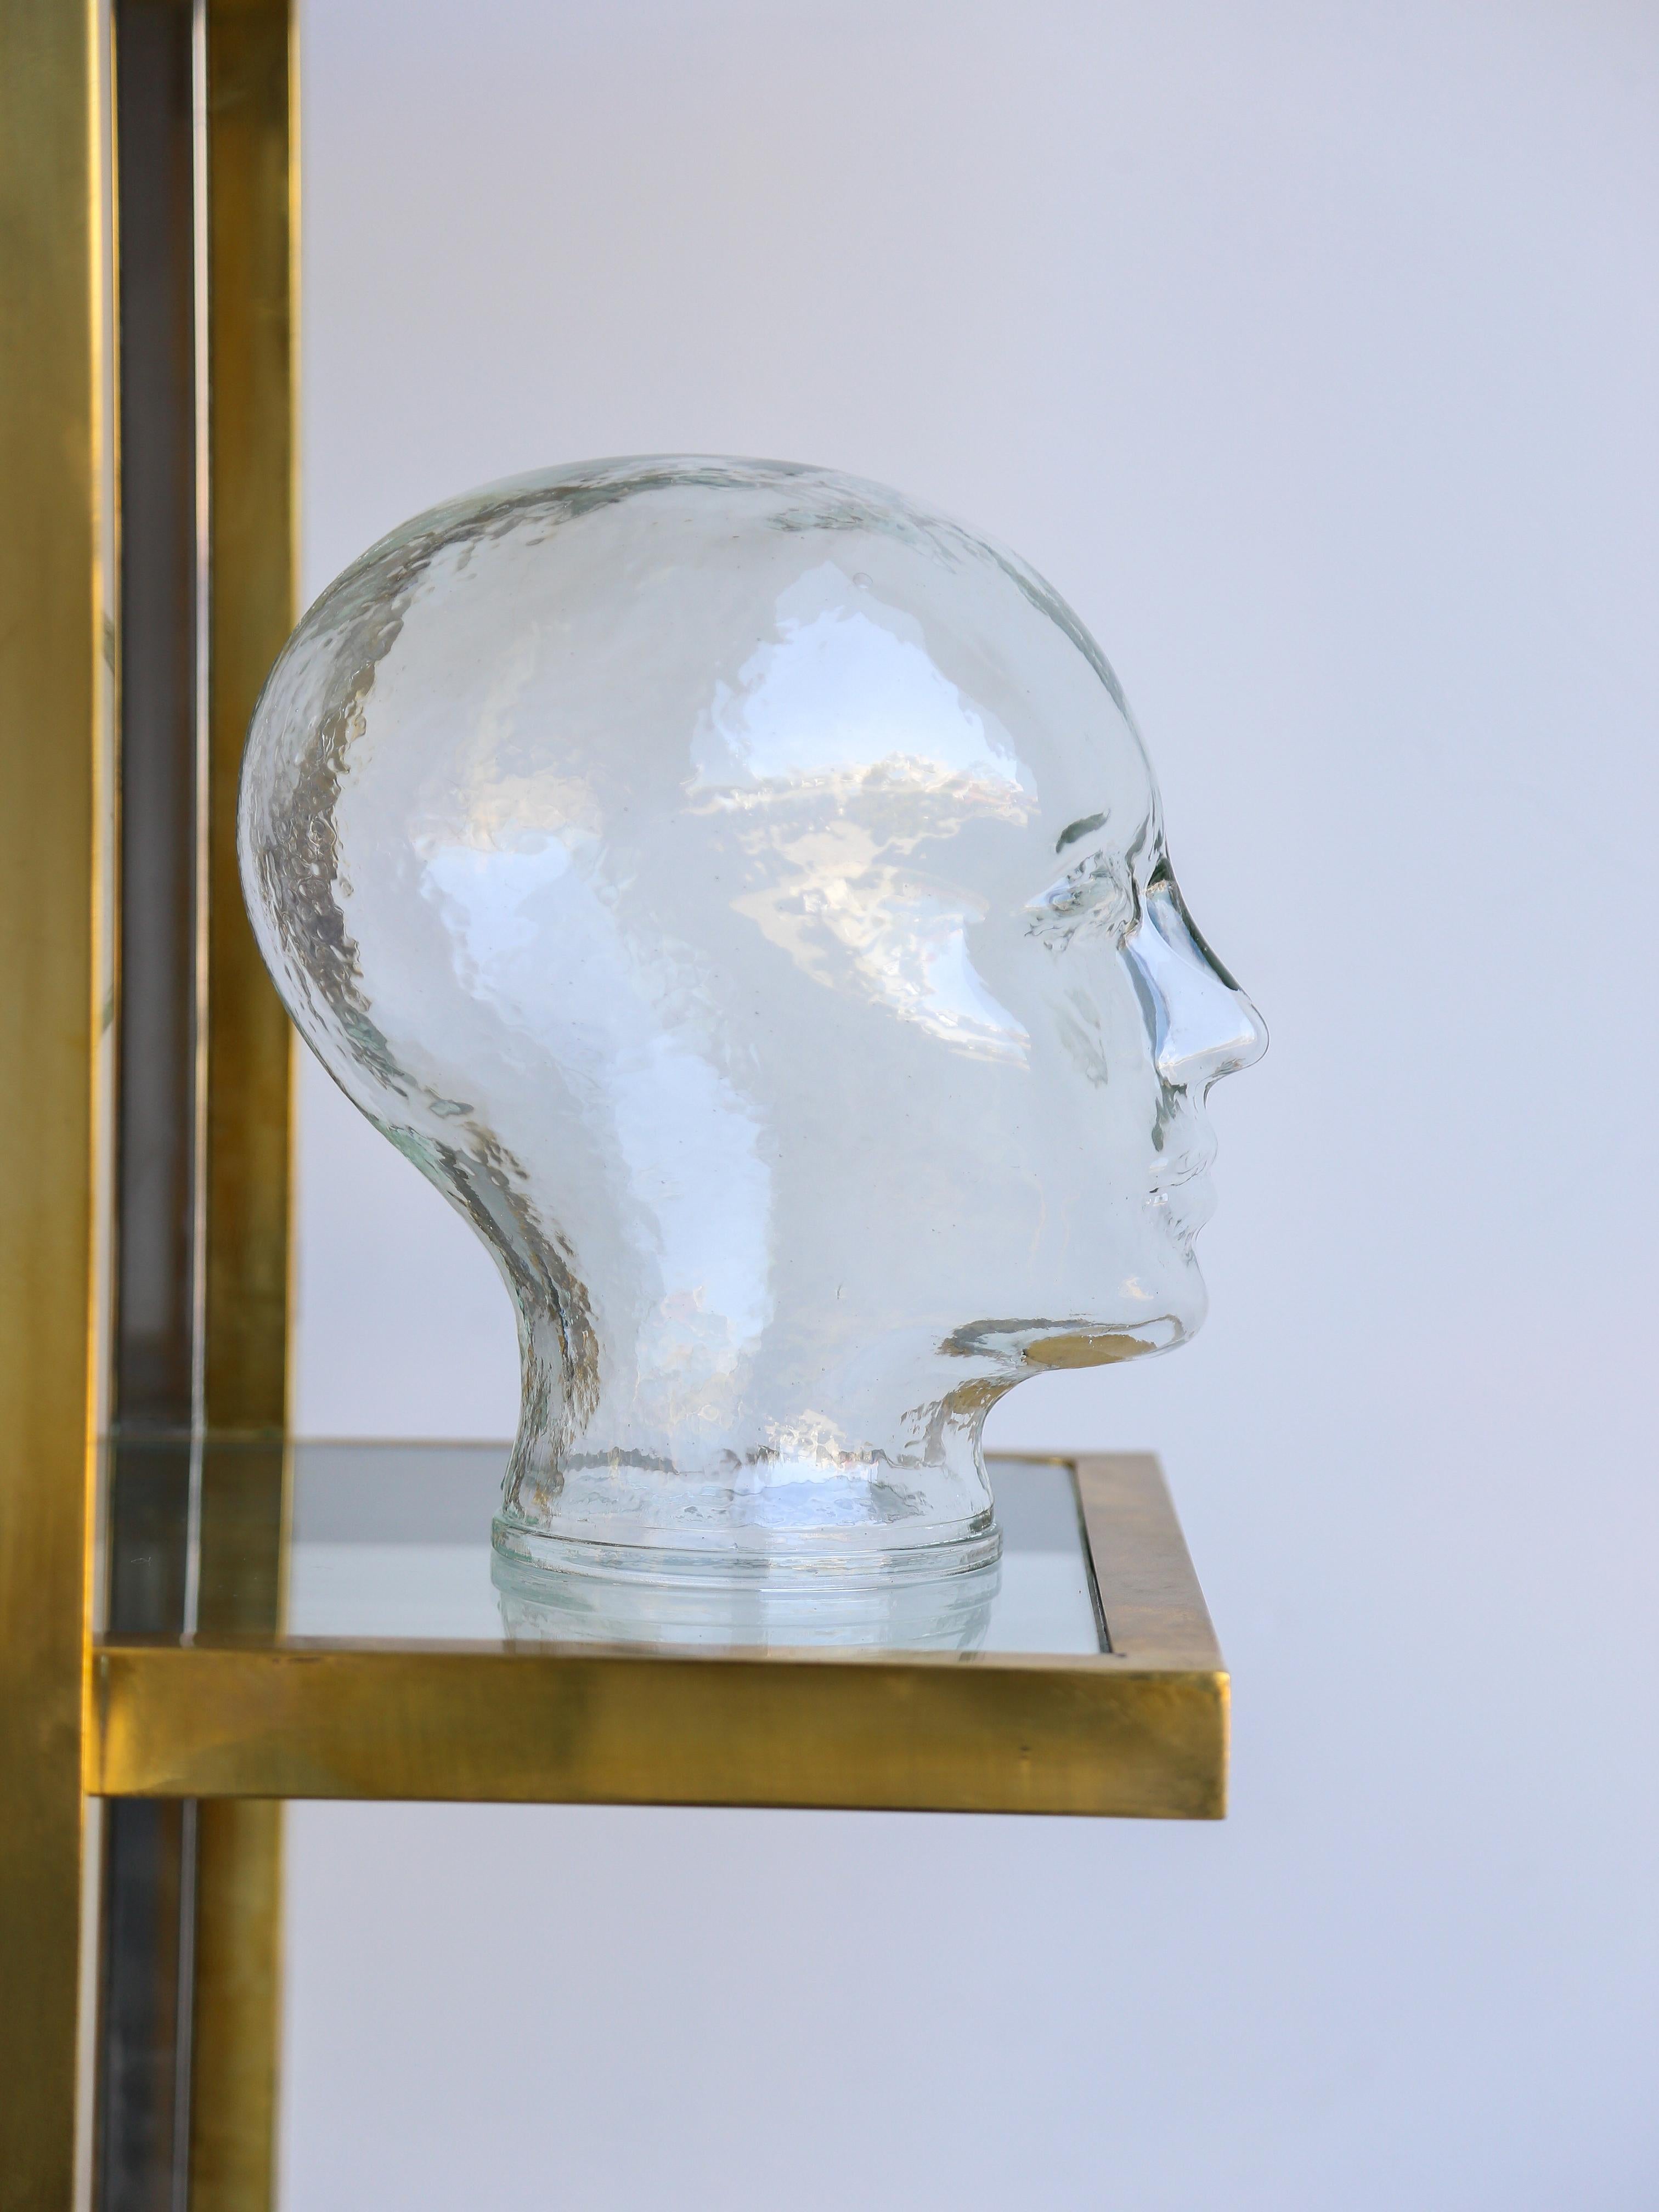 Mid-20th Century Italian Mid Century Modern Crystal Glass Head Sculpture by Piero Fornasetti 1960 For Sale